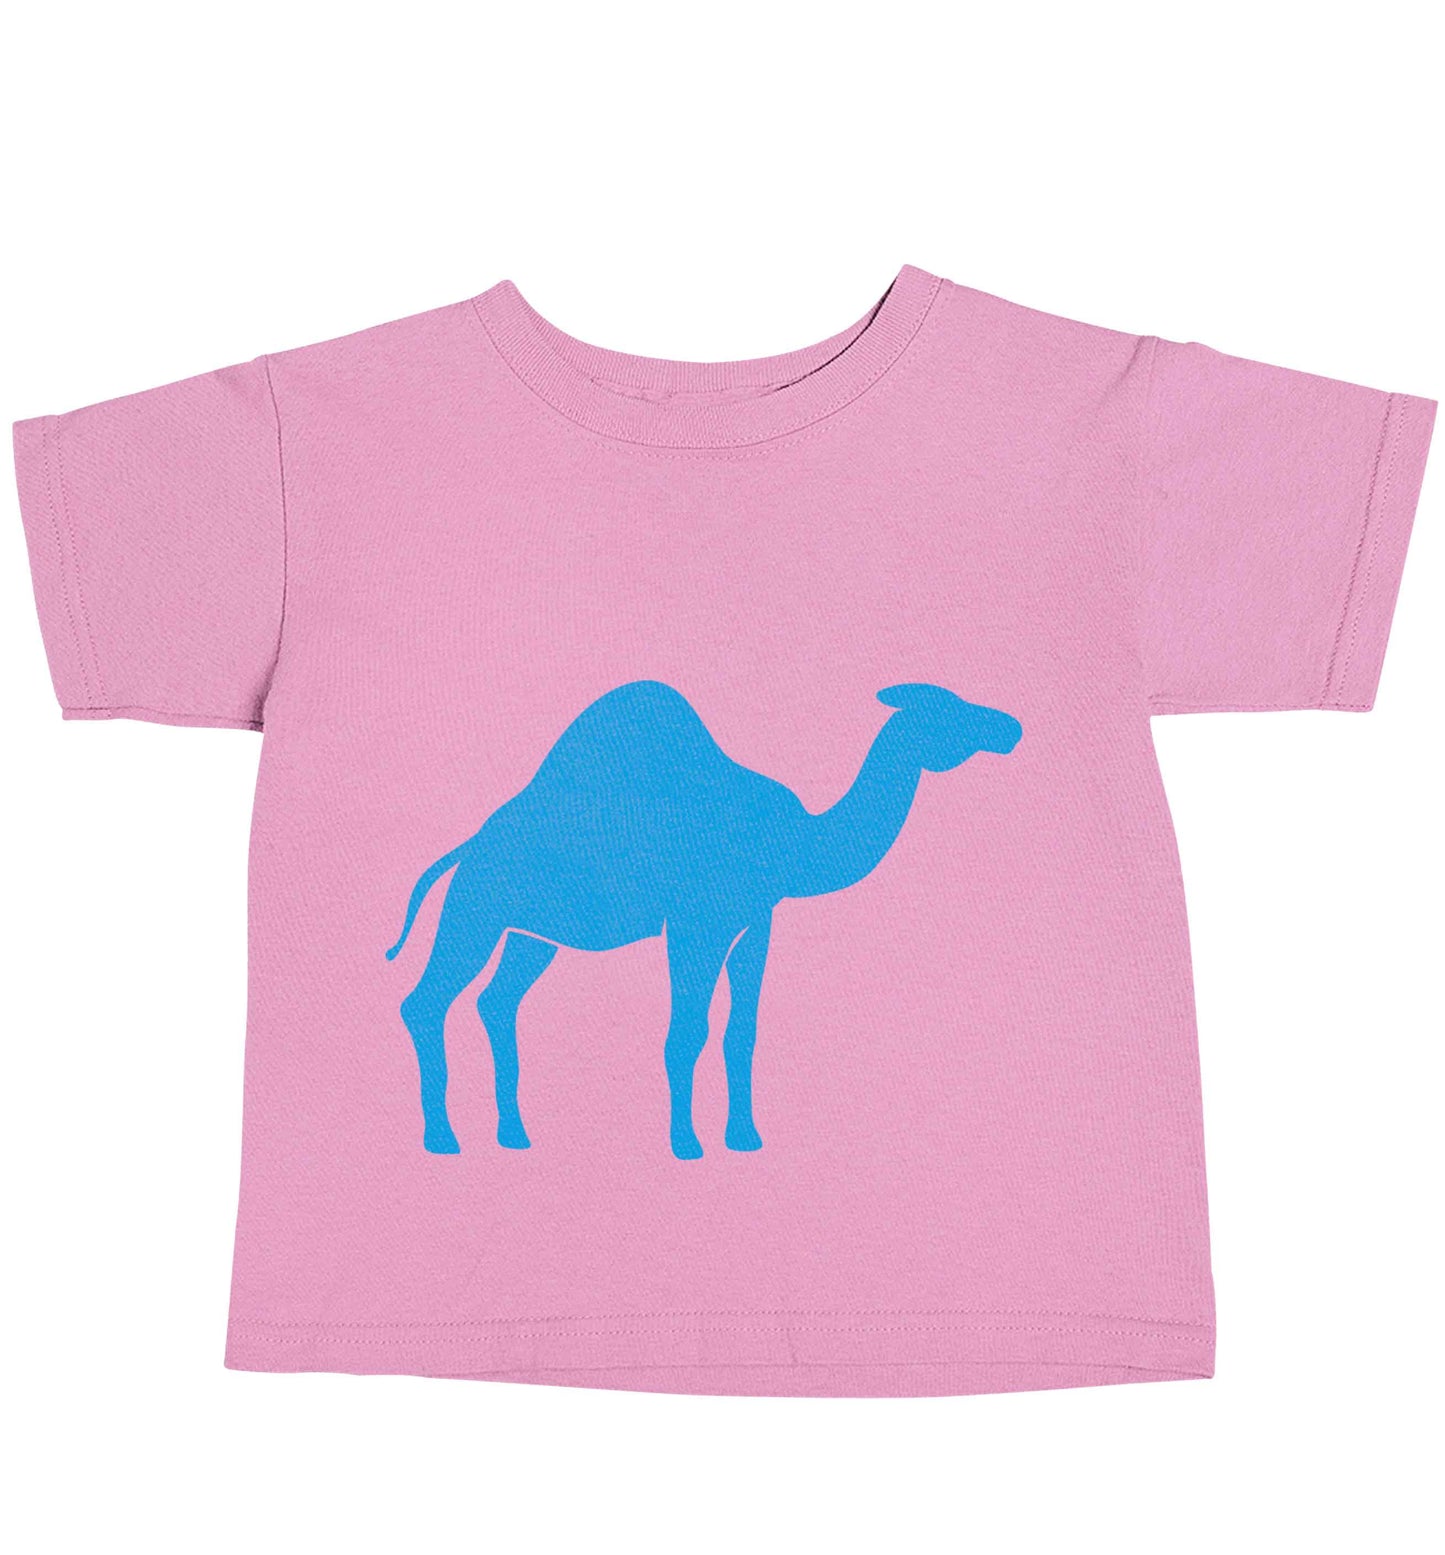 Blue camel light pink baby toddler Tshirt 2 Years